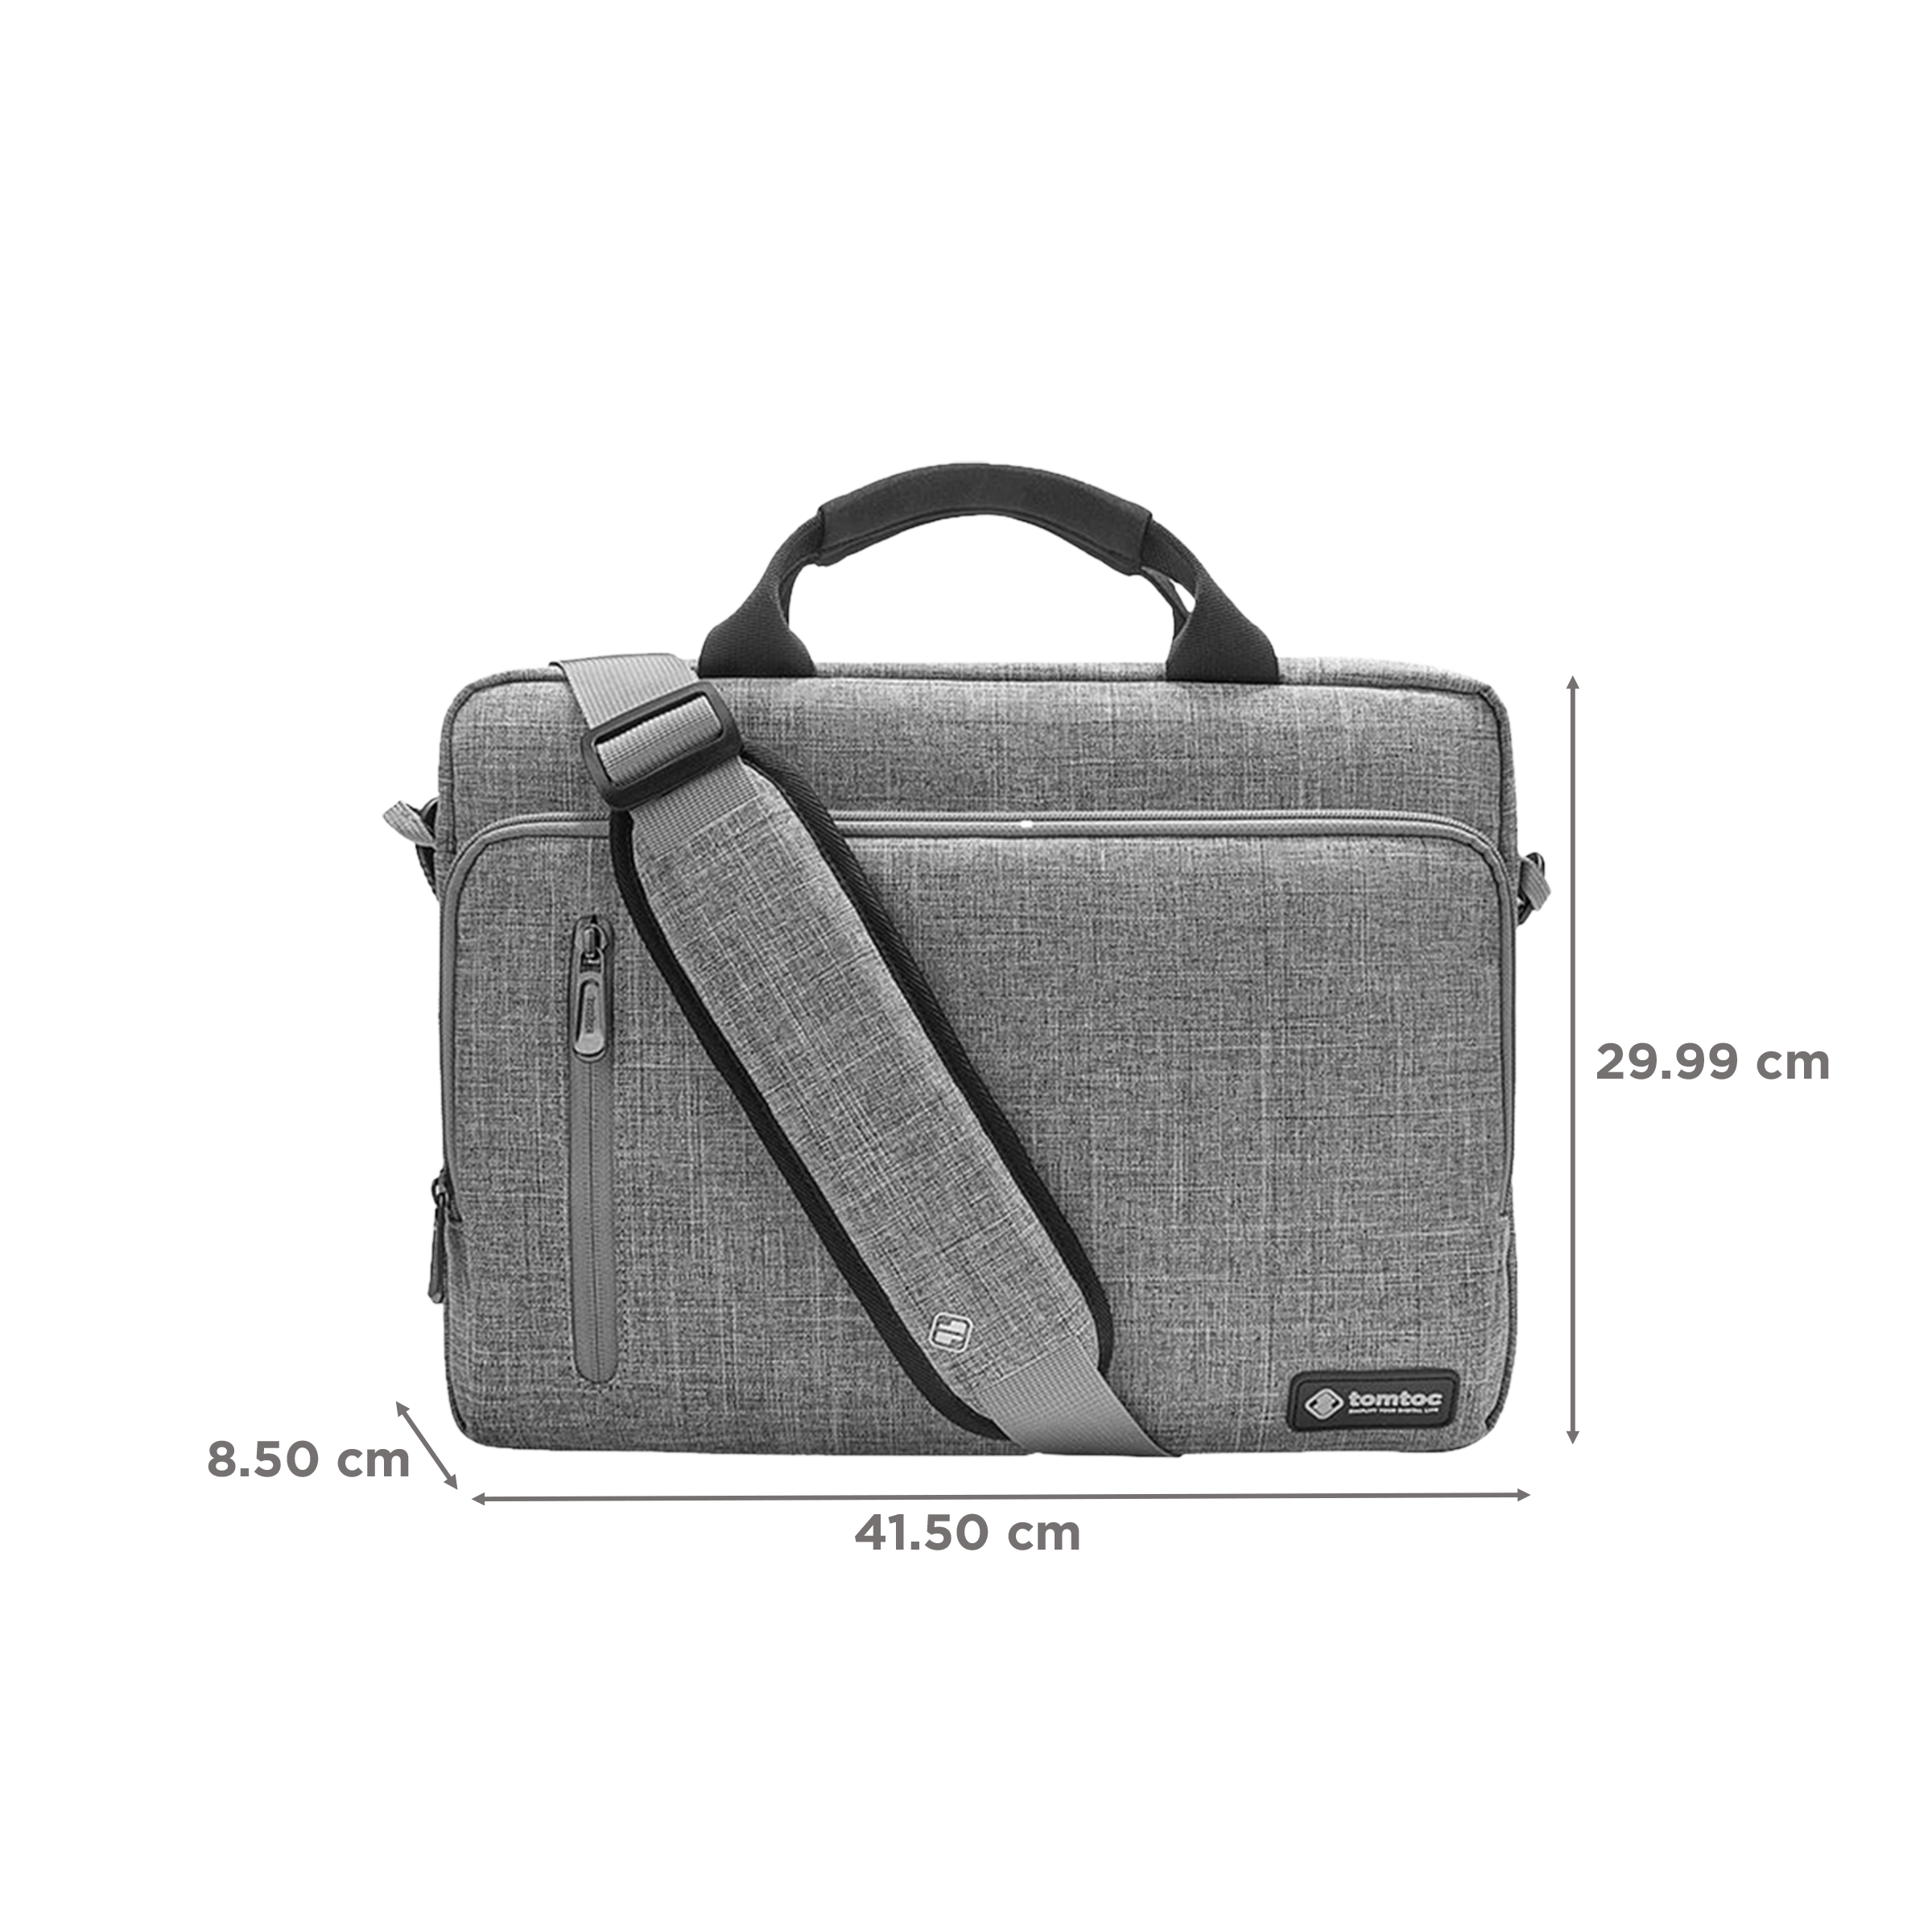 Waist  crossbody bags 7711 dark grey Sling bag for mobile devices